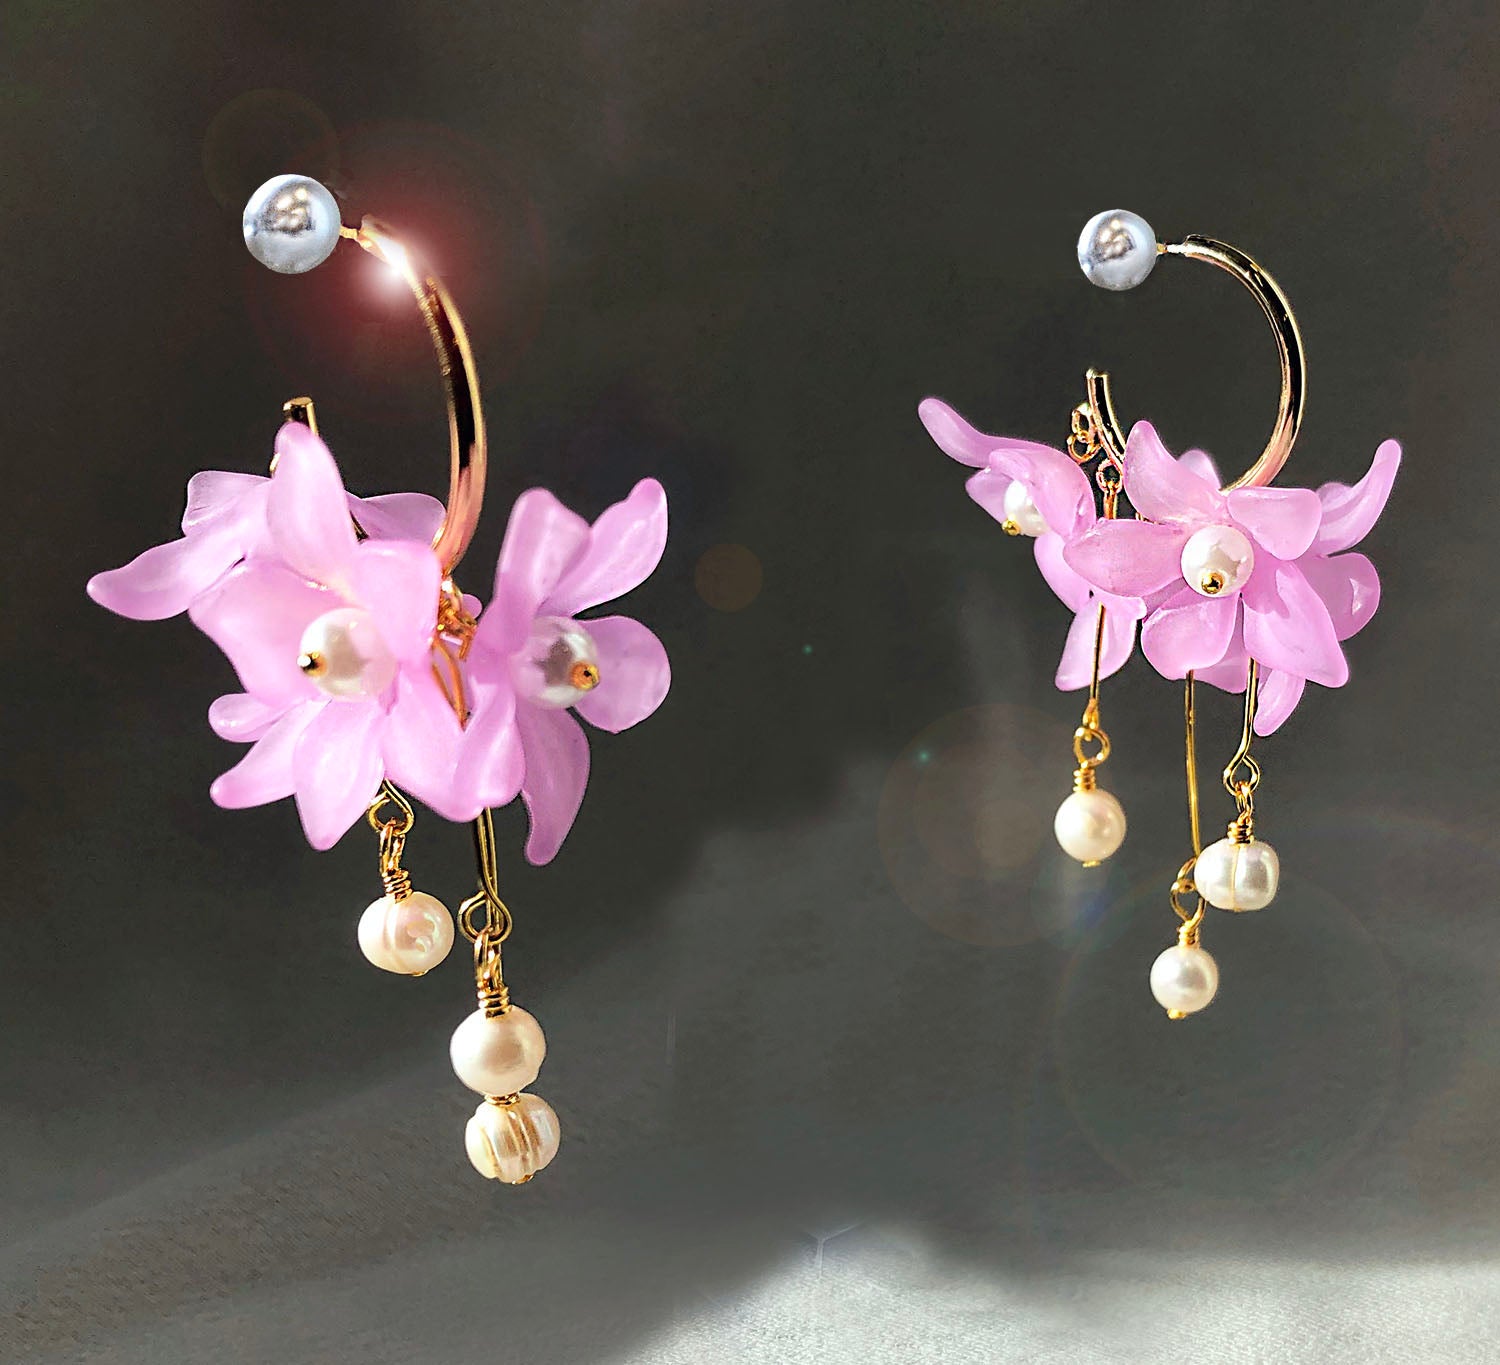 The Flora Earrings in Pretty in Pink by Sheena Solis